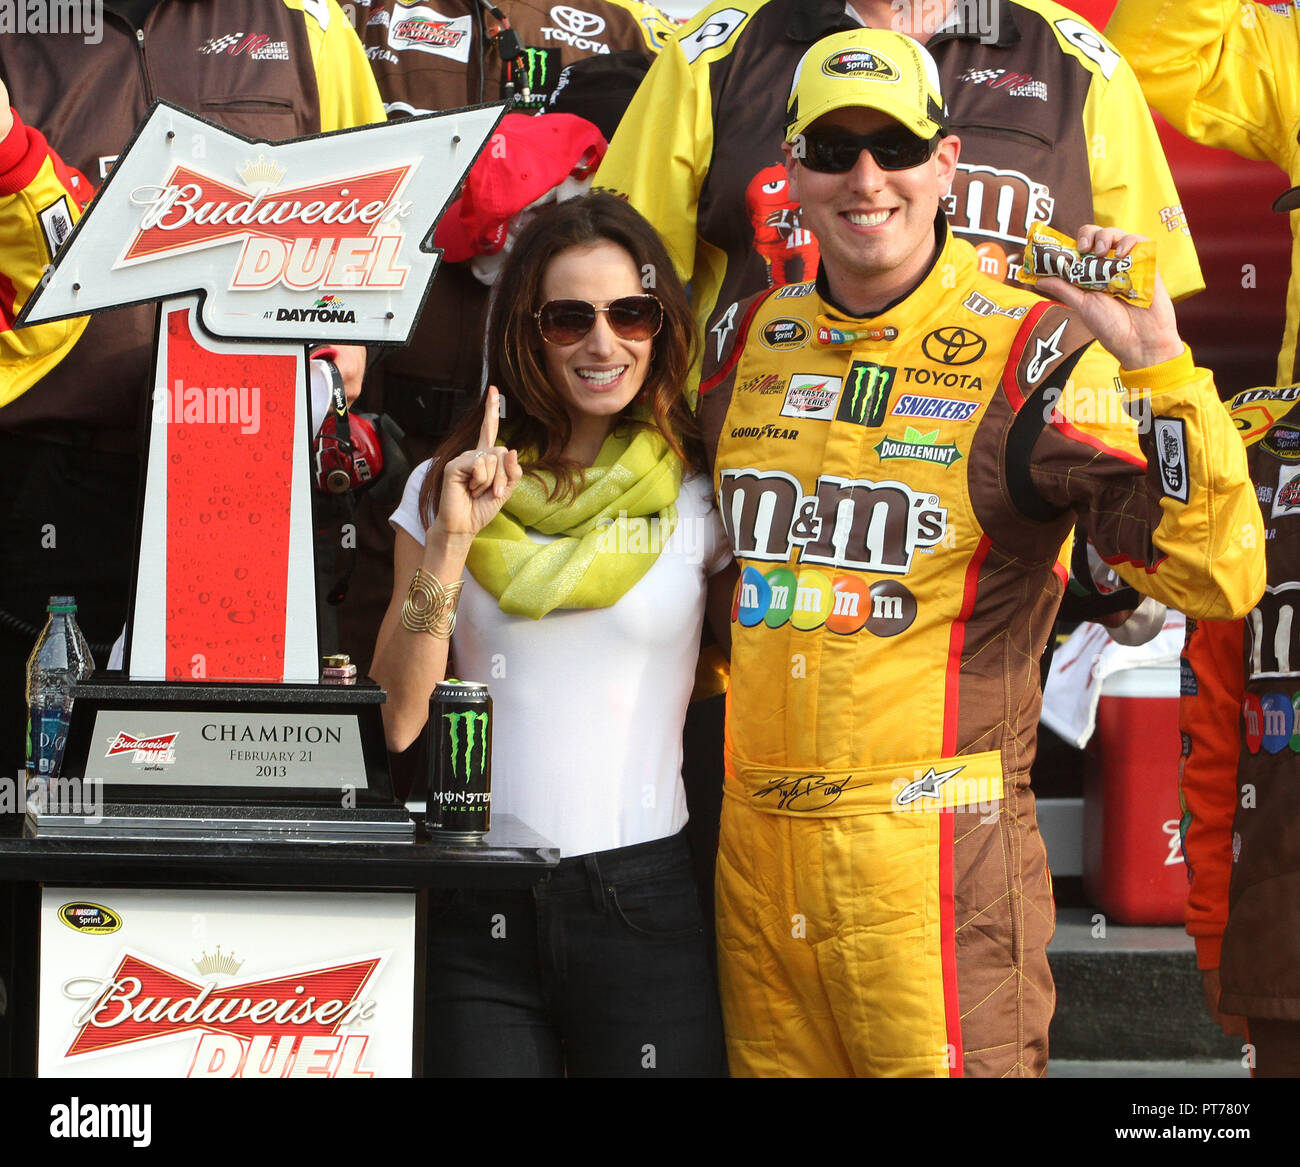 Kyle Busch e sua moglie festeggiare la conquista la NASCAR Sprint Cup Budweiser duello #2, al Daytona International Speedway di Daytona, Florida il 21 febbraio 2013. Foto Stock